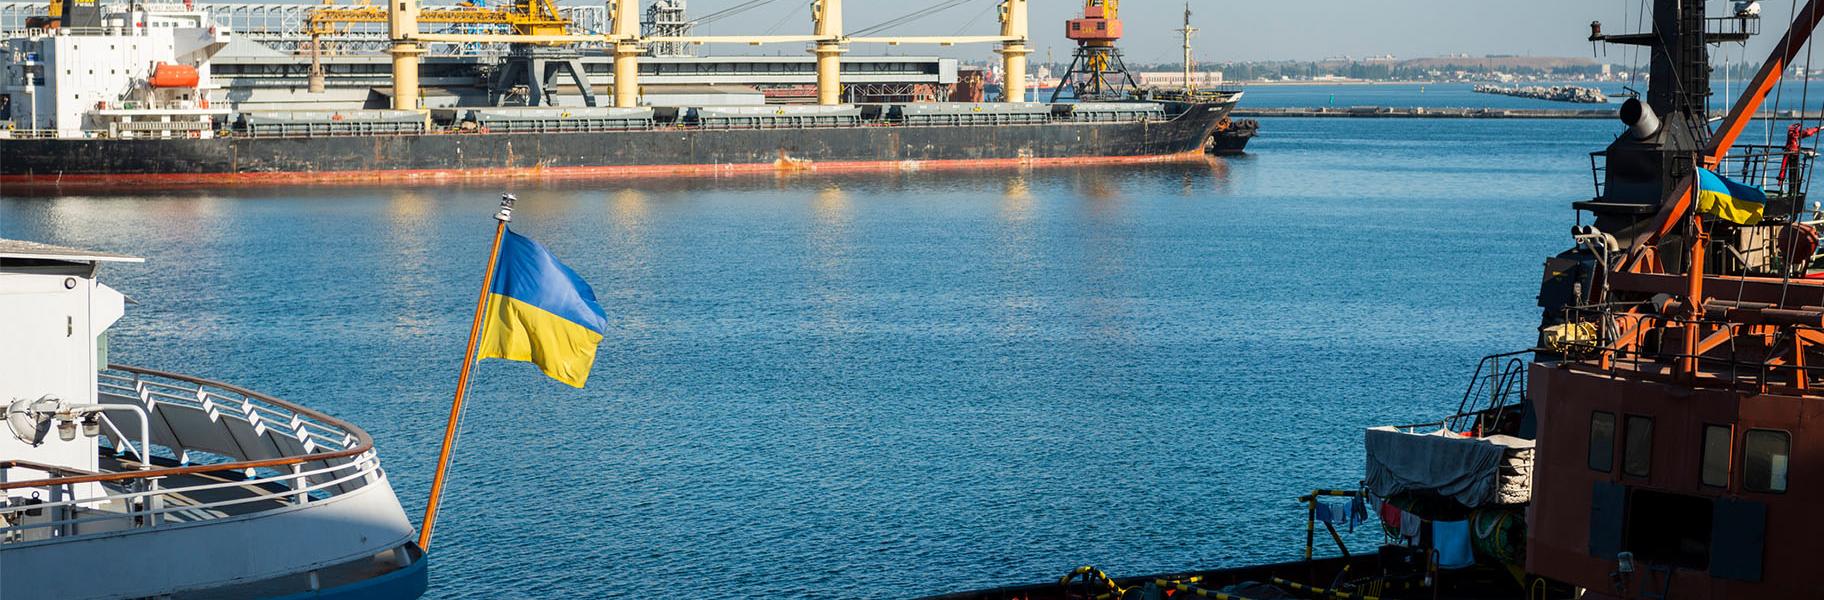 shipping-port-odessa-ukraine-black-sea